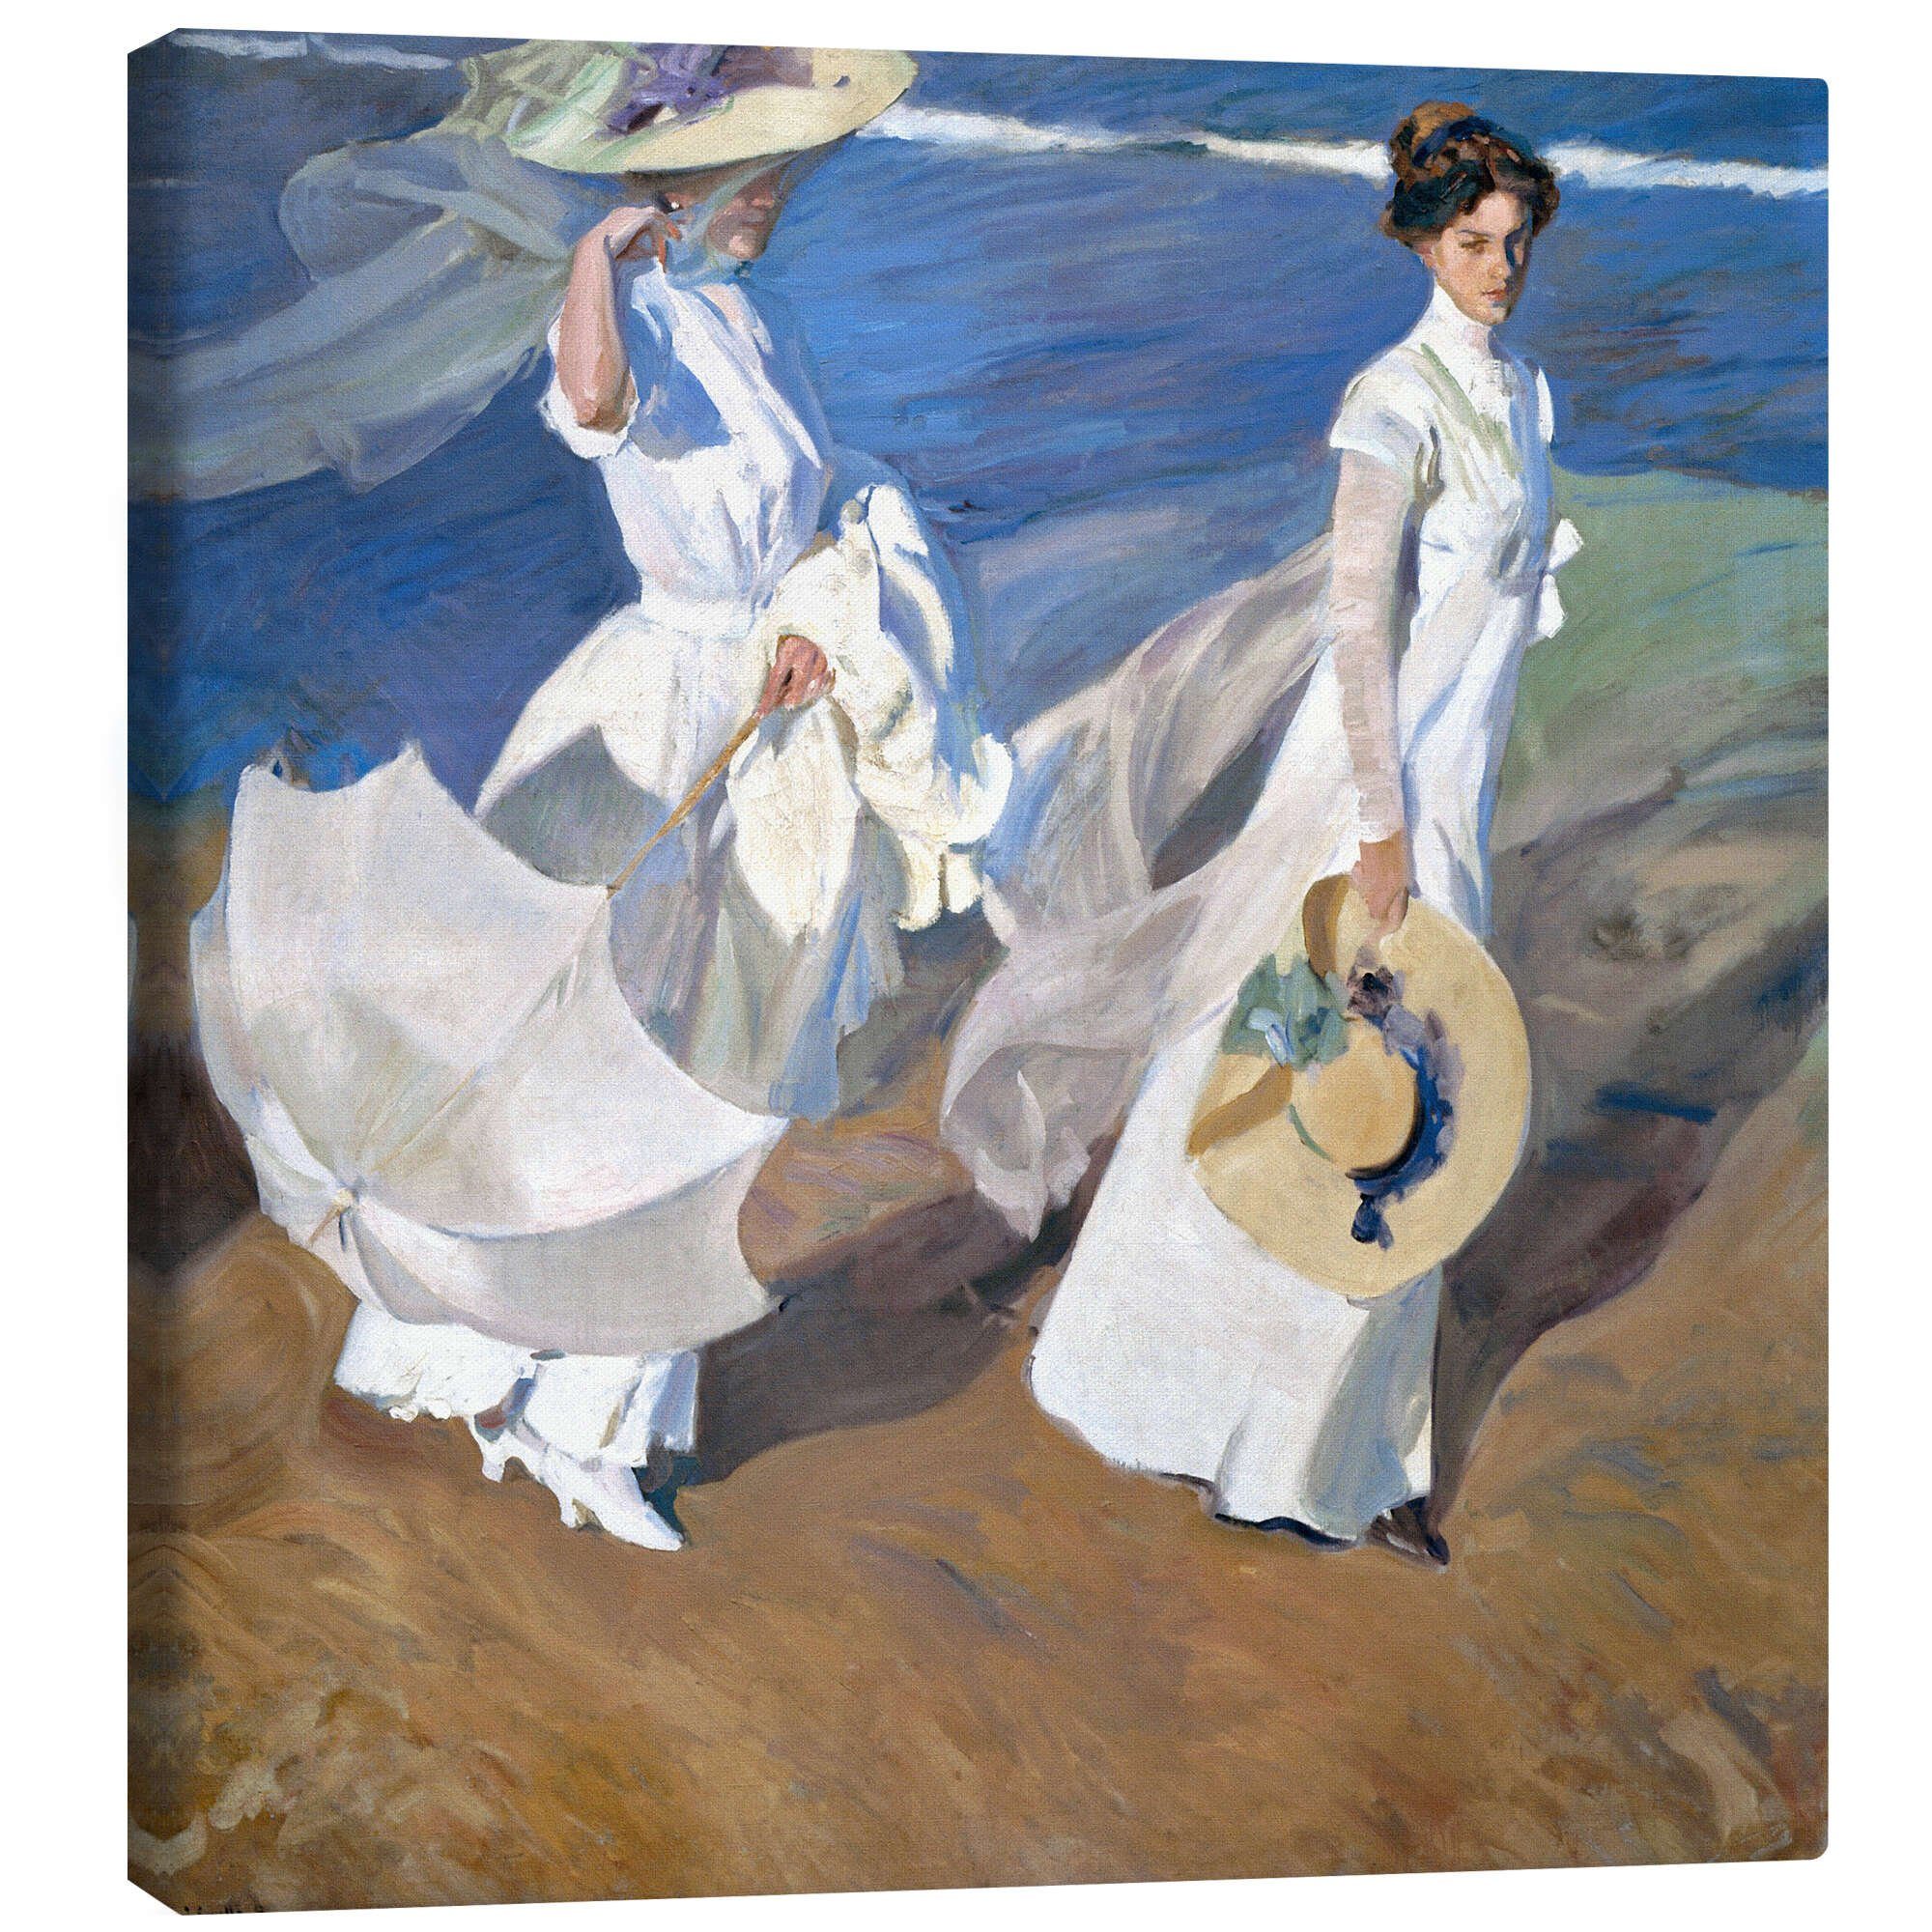 Posterlounge Leinwandbild Joaquín Sorolla y Bastida, Spaziergang entlang der Küste, 1909, Badezimmer Maritim Malerei